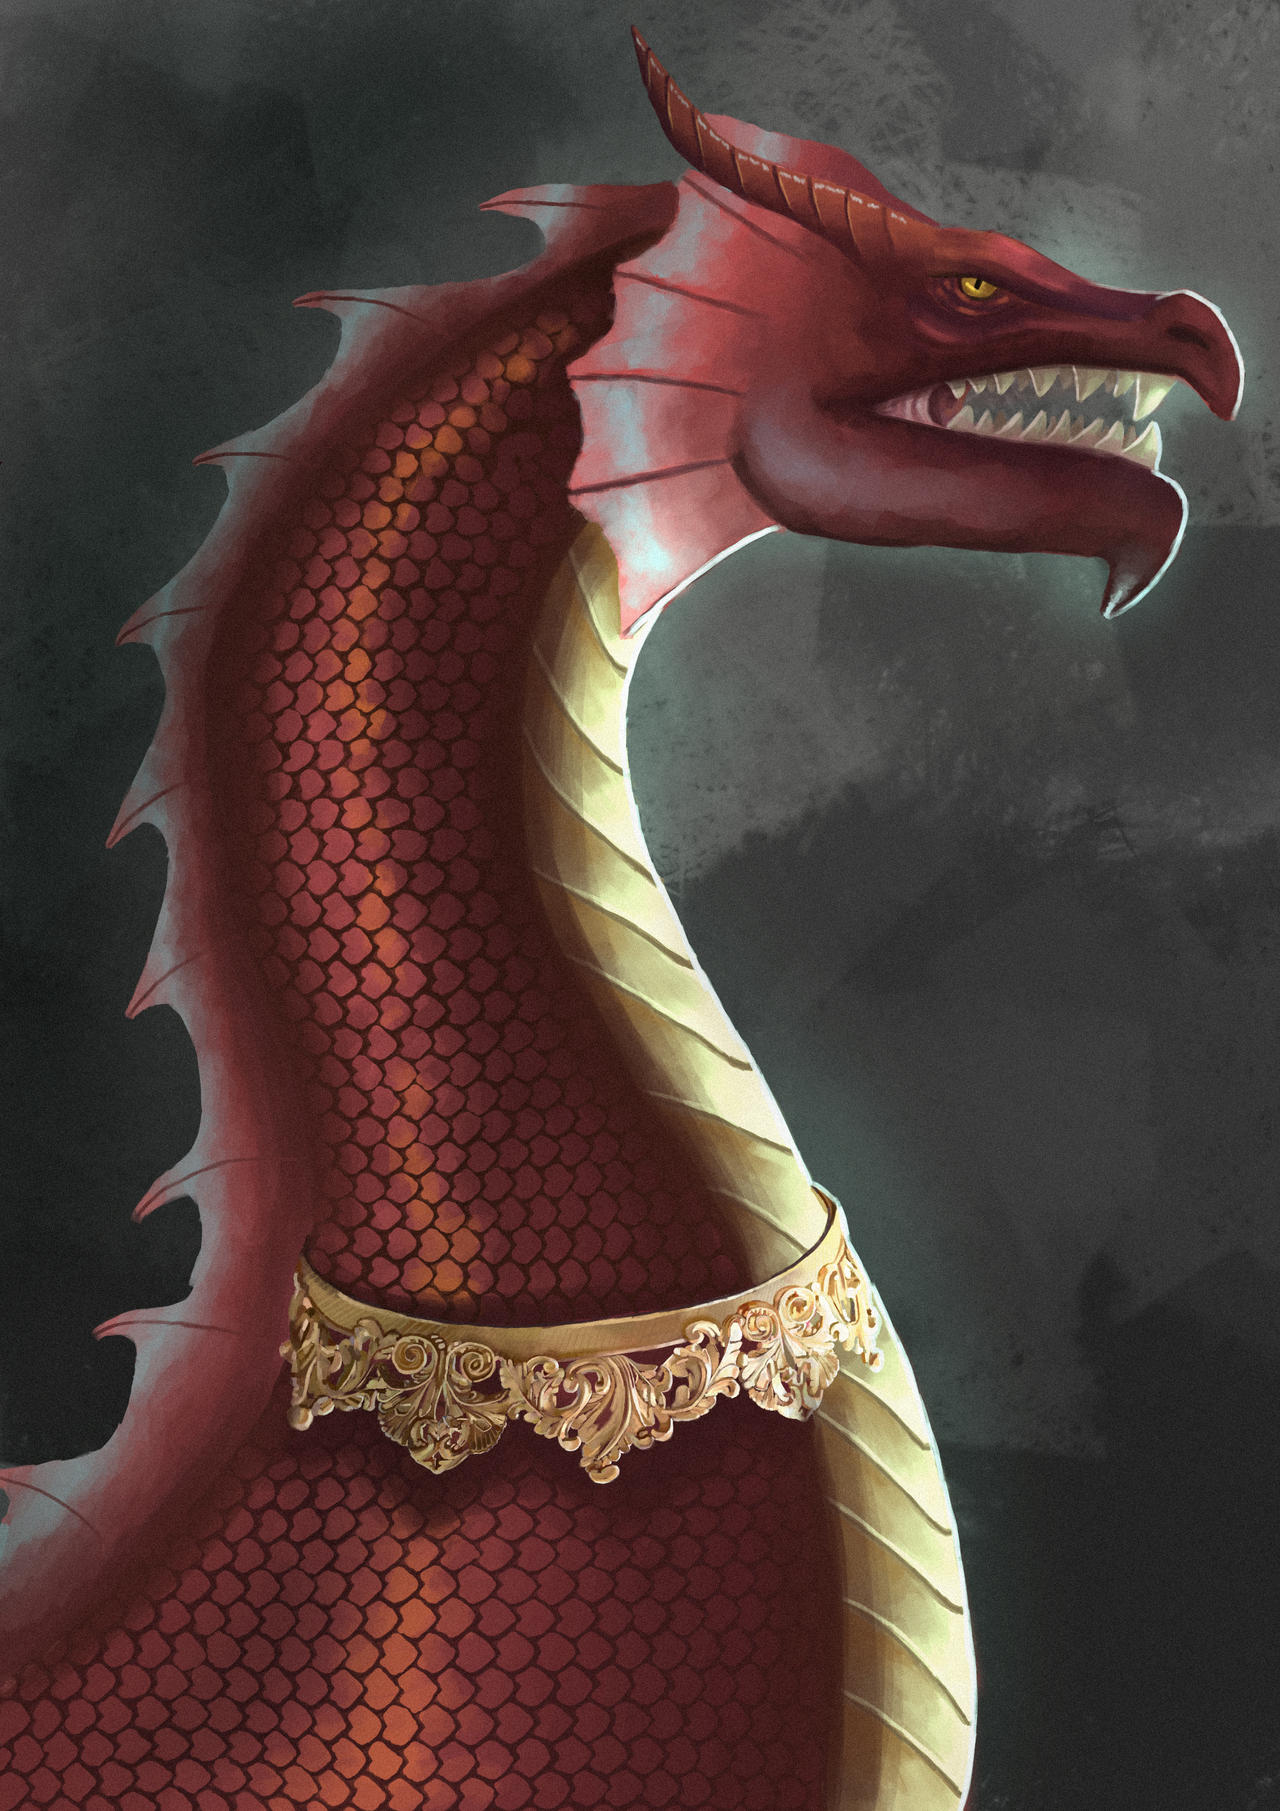 Red dragon by Azany on DeviantArt